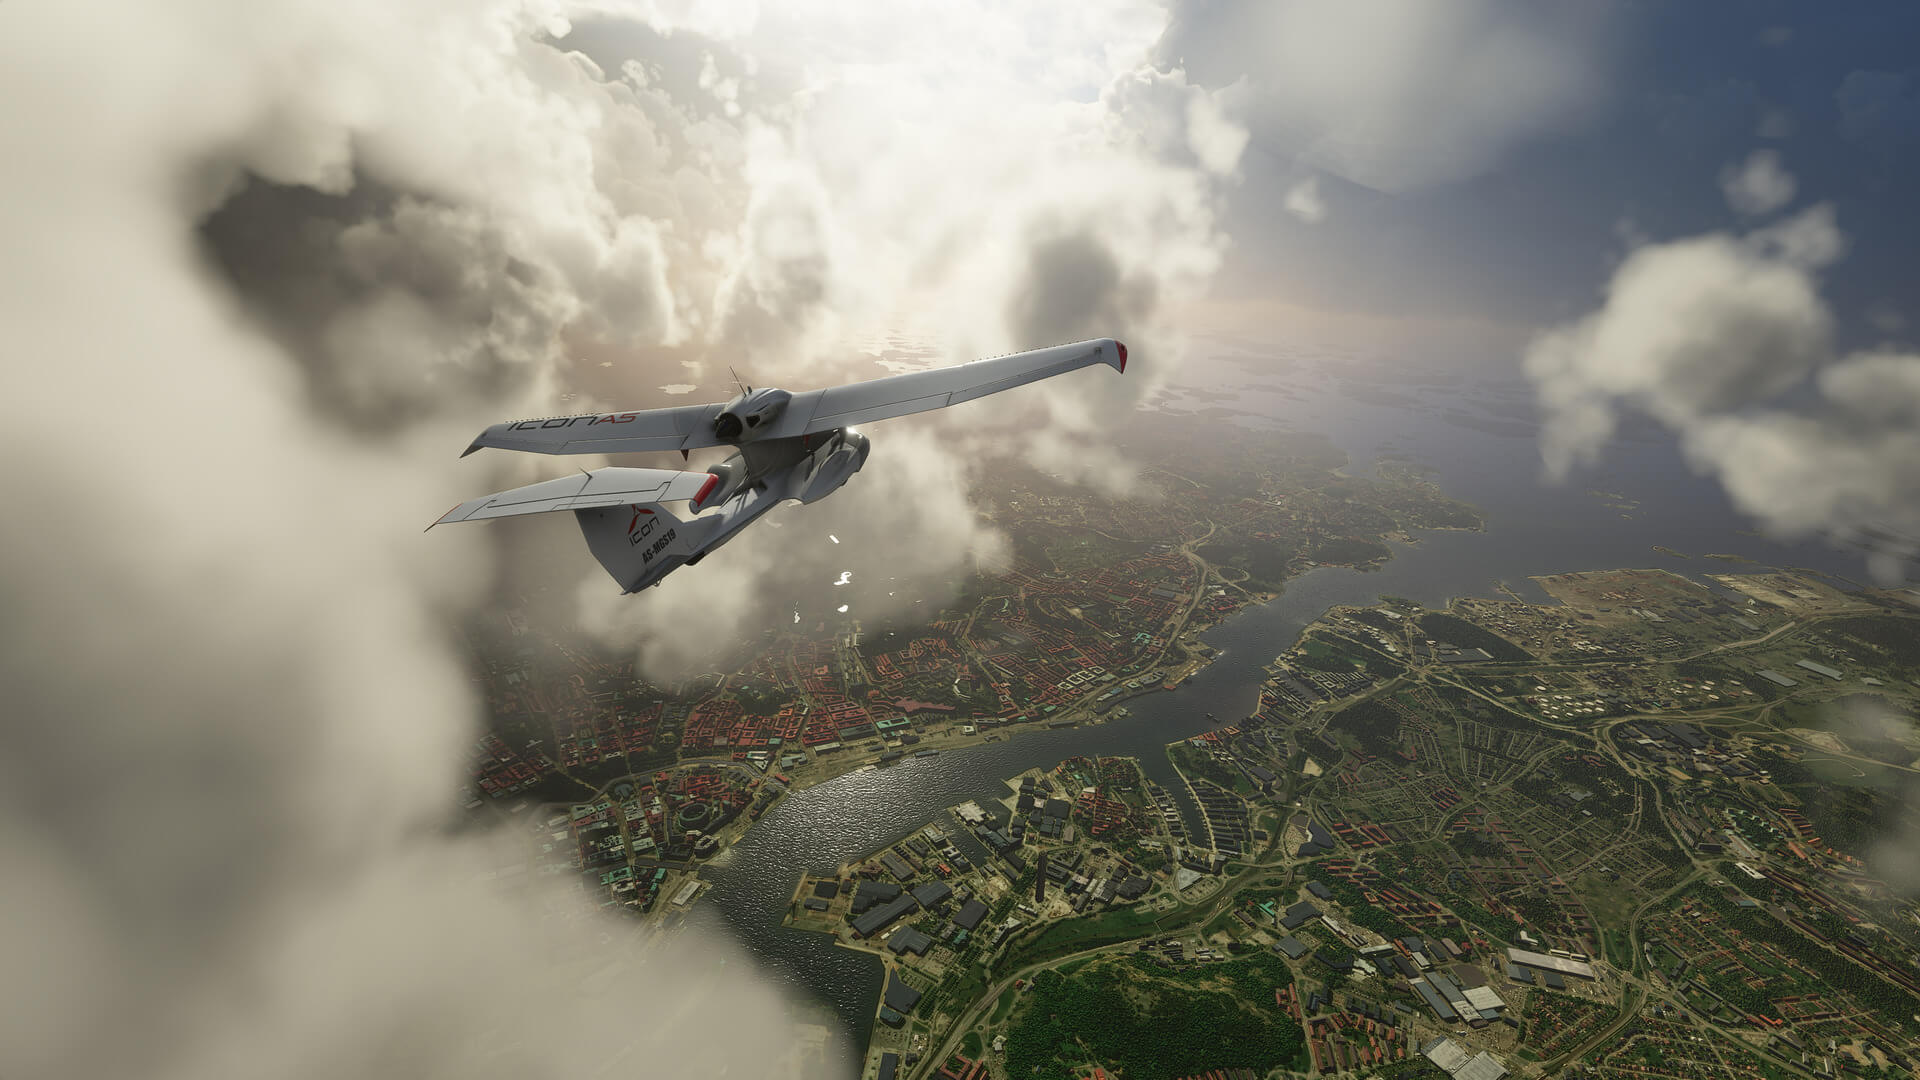 Microsoft Flight Simulator head on 40th anniversary celebrations, streaming  and preservation